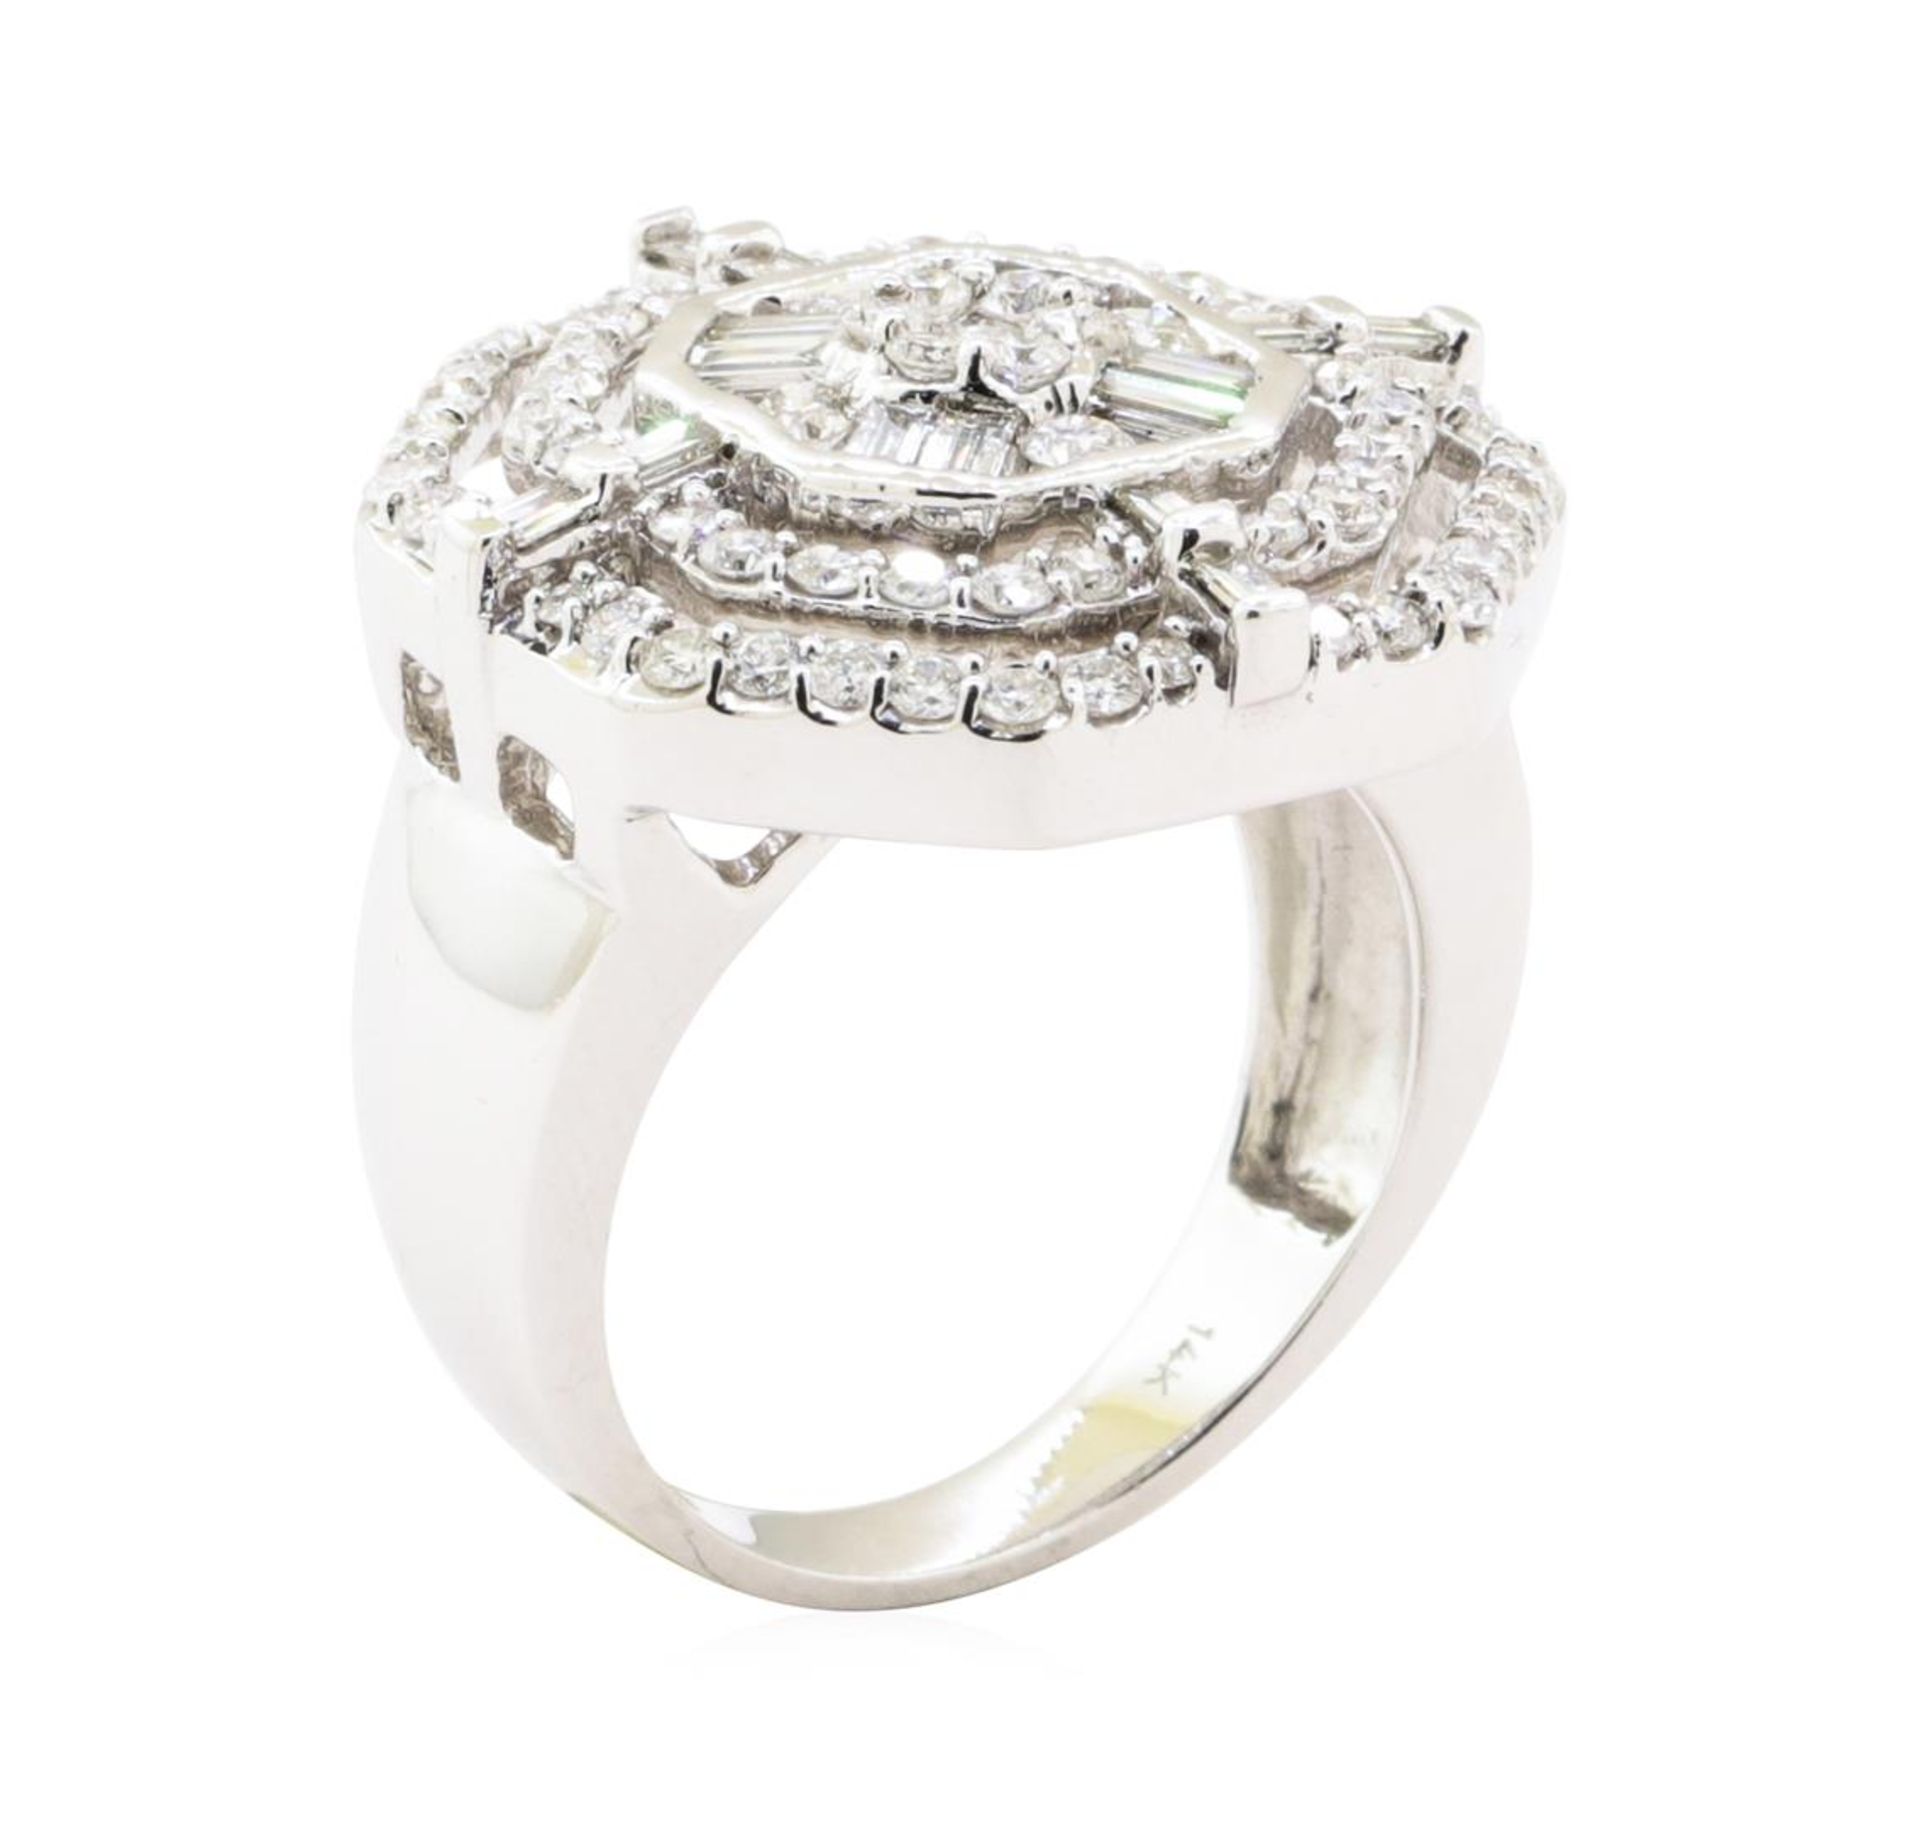 1.70 ctw Diamond Ring - 14KT White Gold - Image 4 of 4